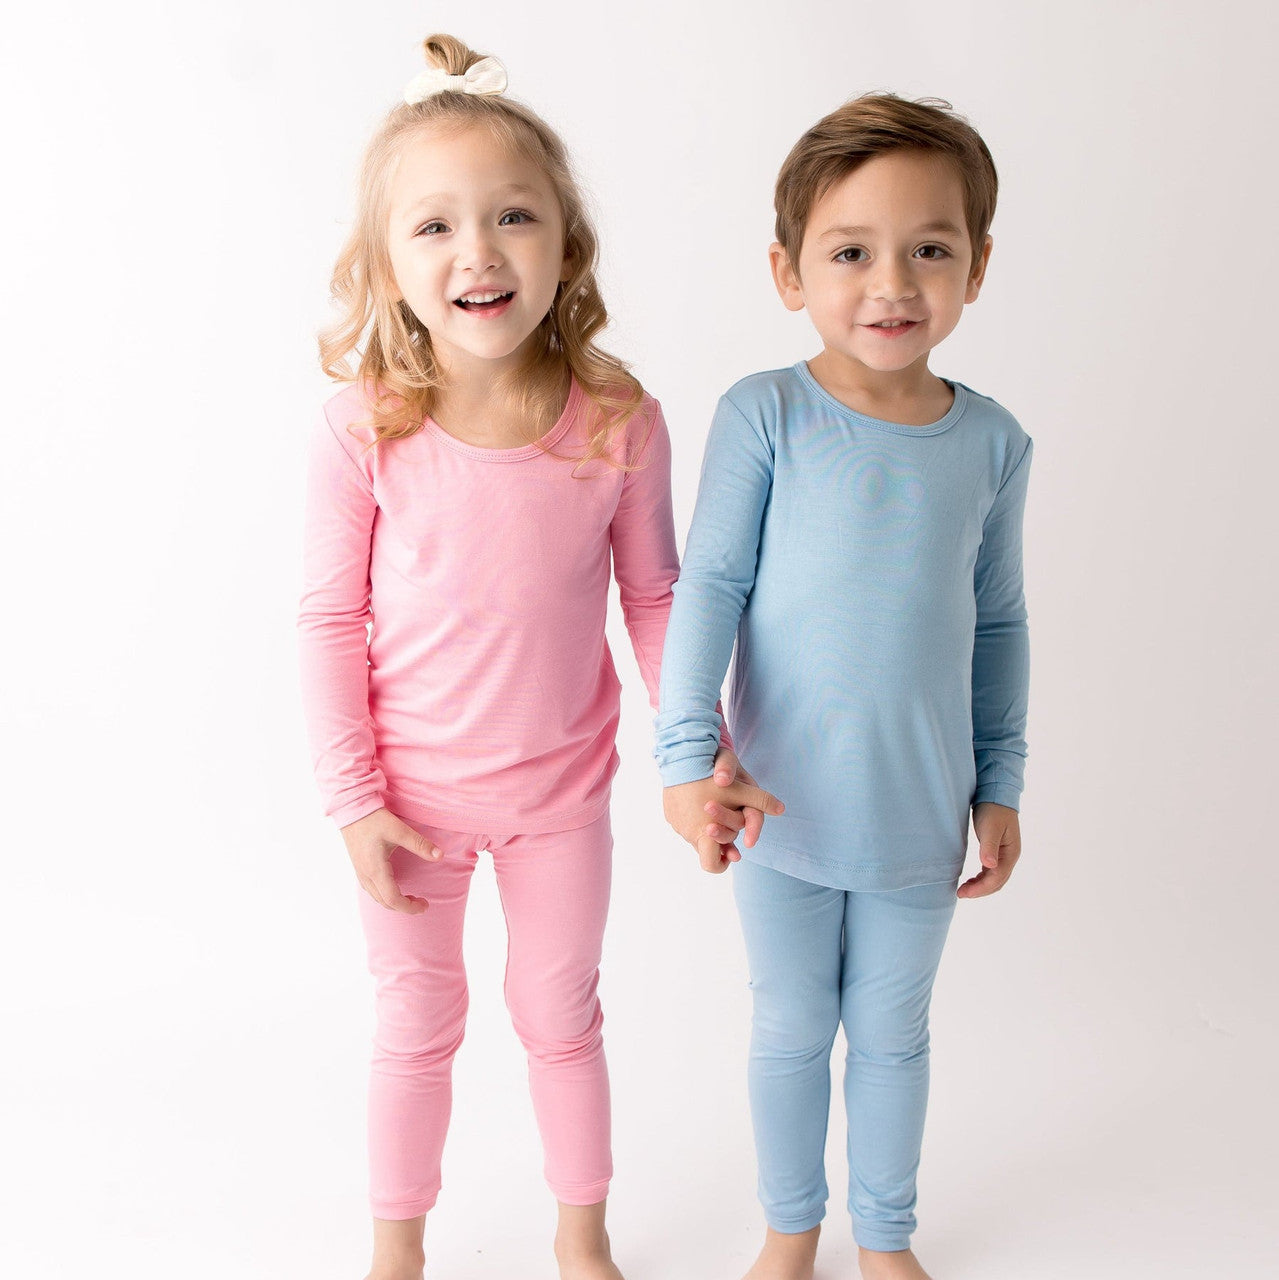 Kyte Toddler Pajama Set in Stream